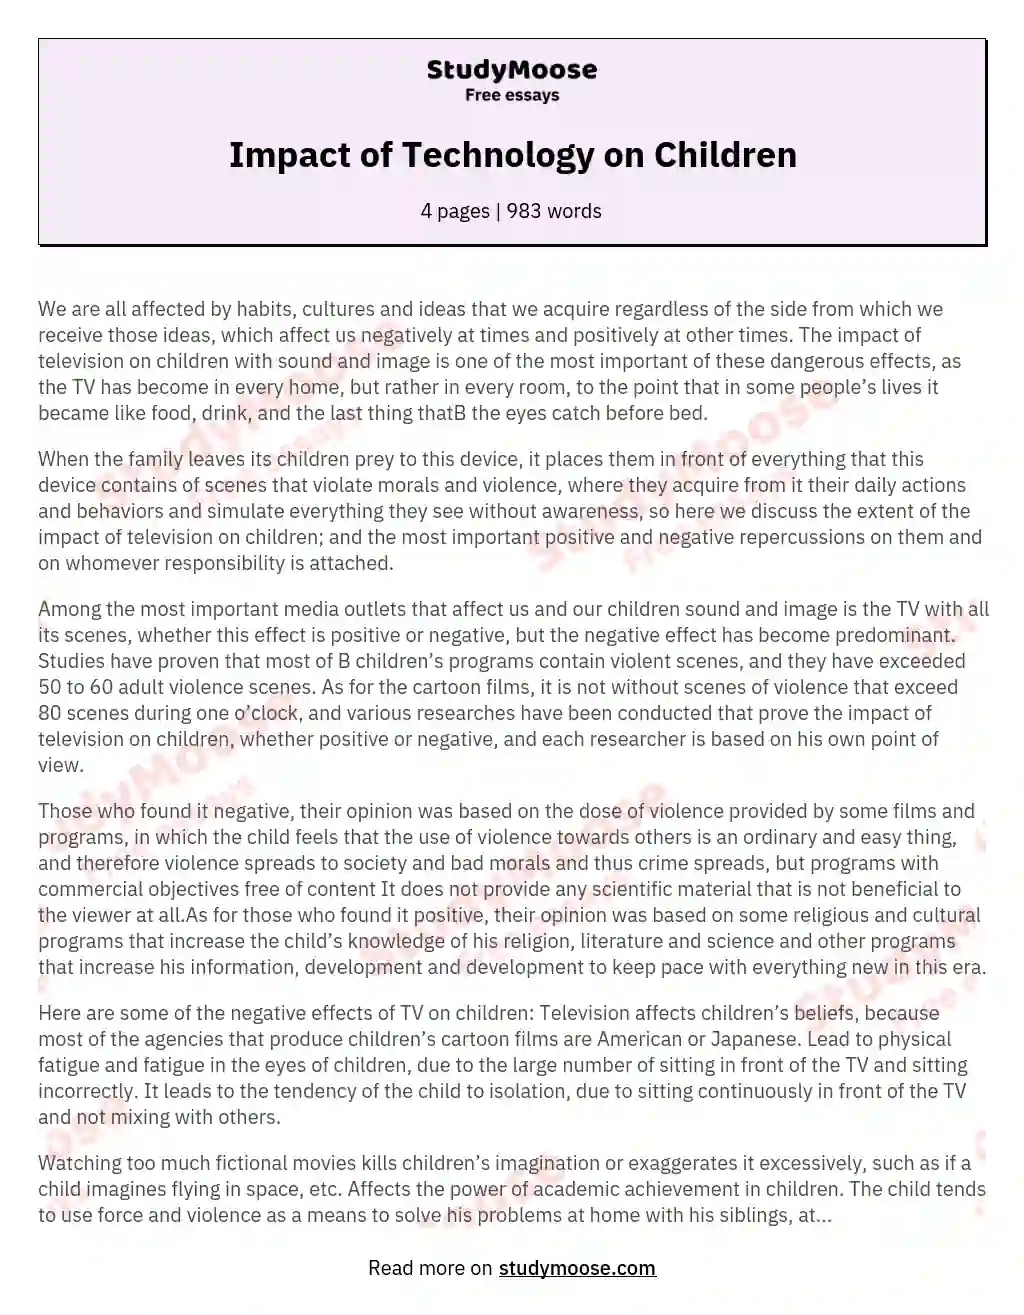 Impact of Technology on Children essay